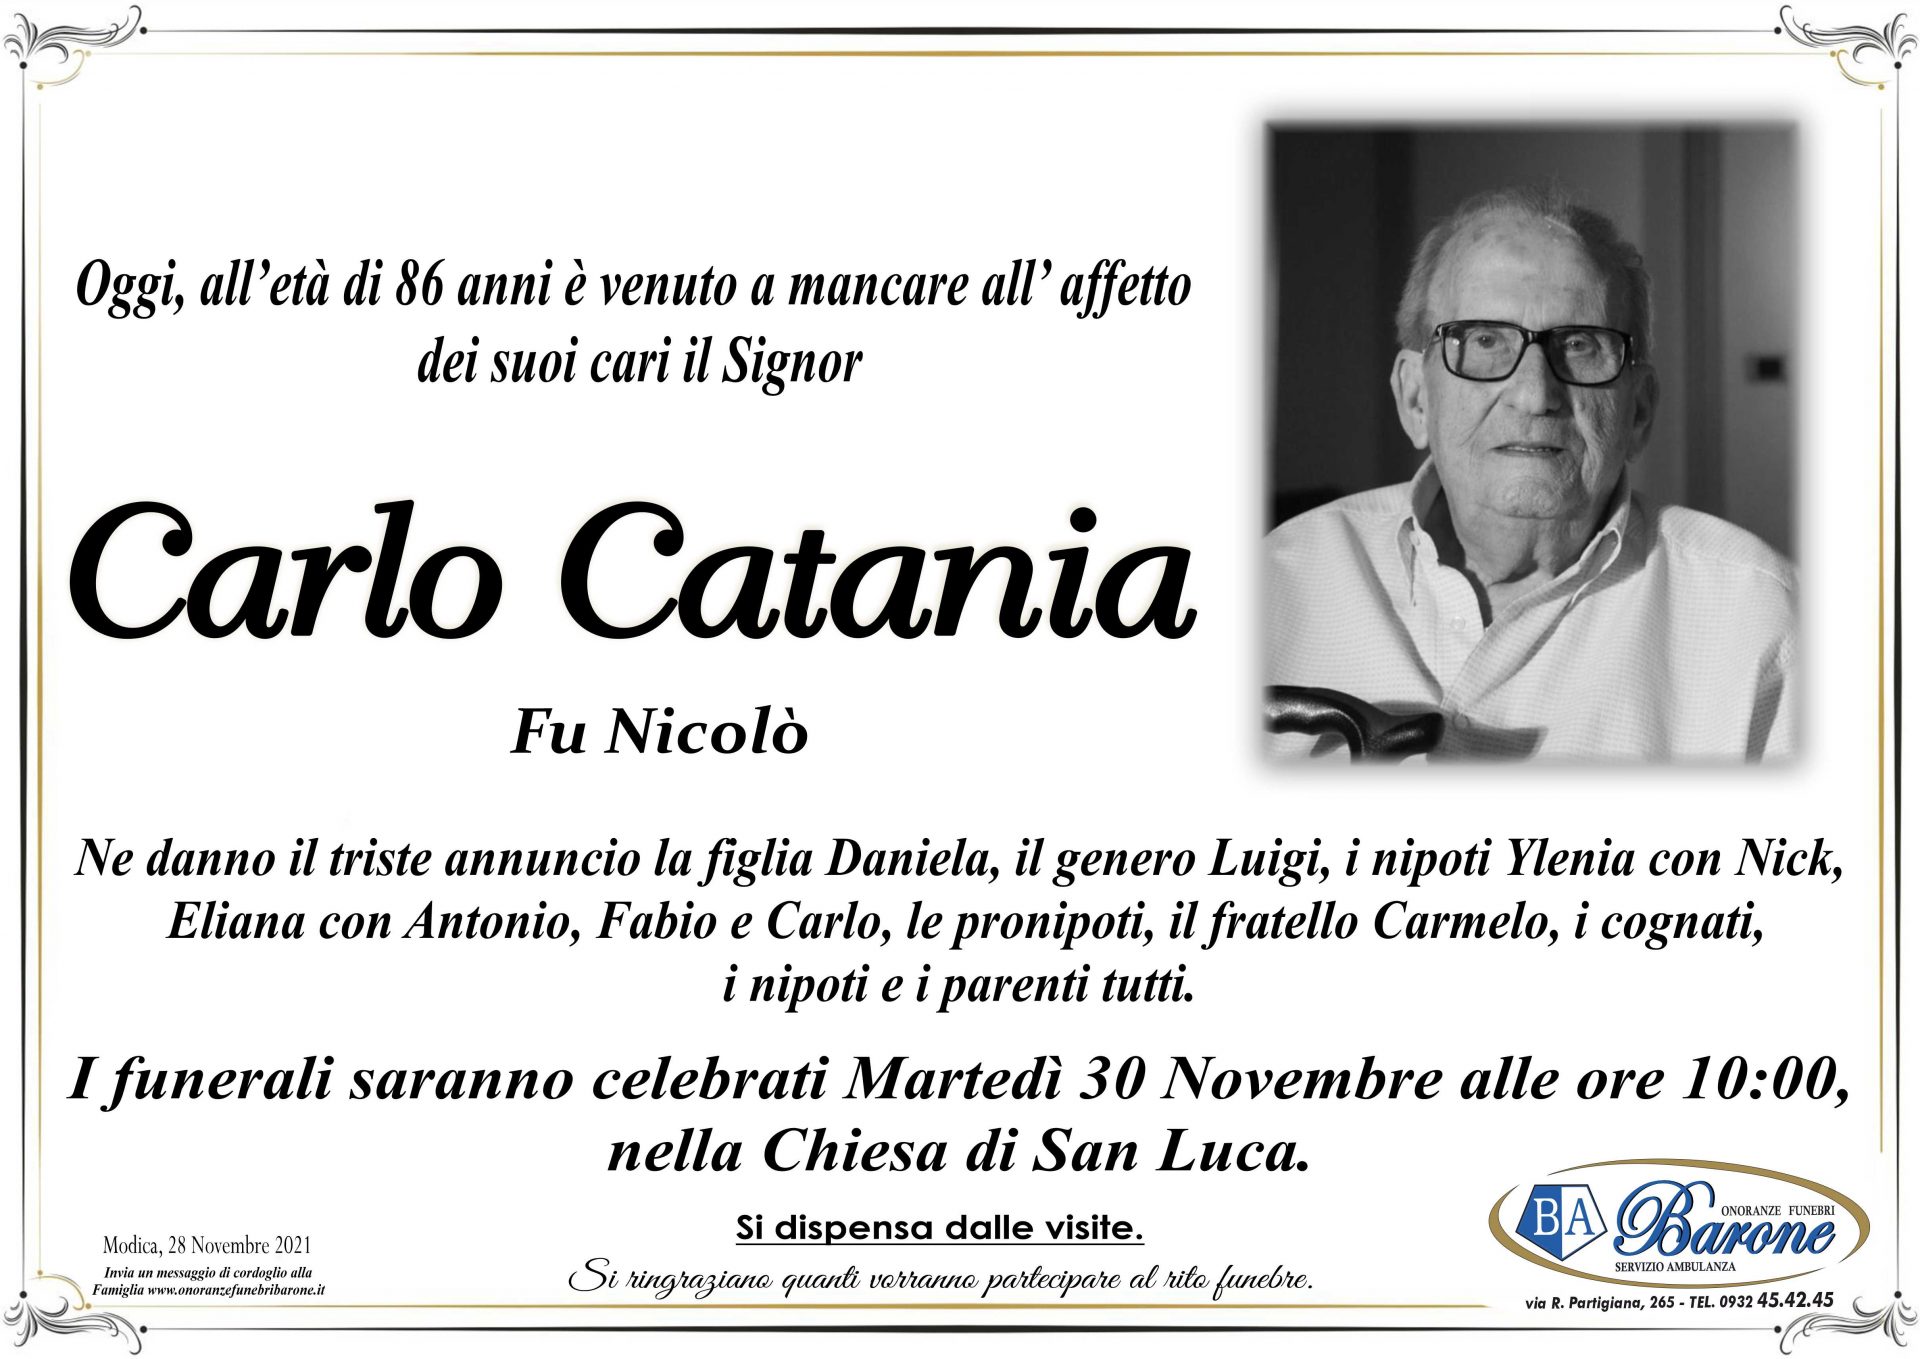 Carlo Catania